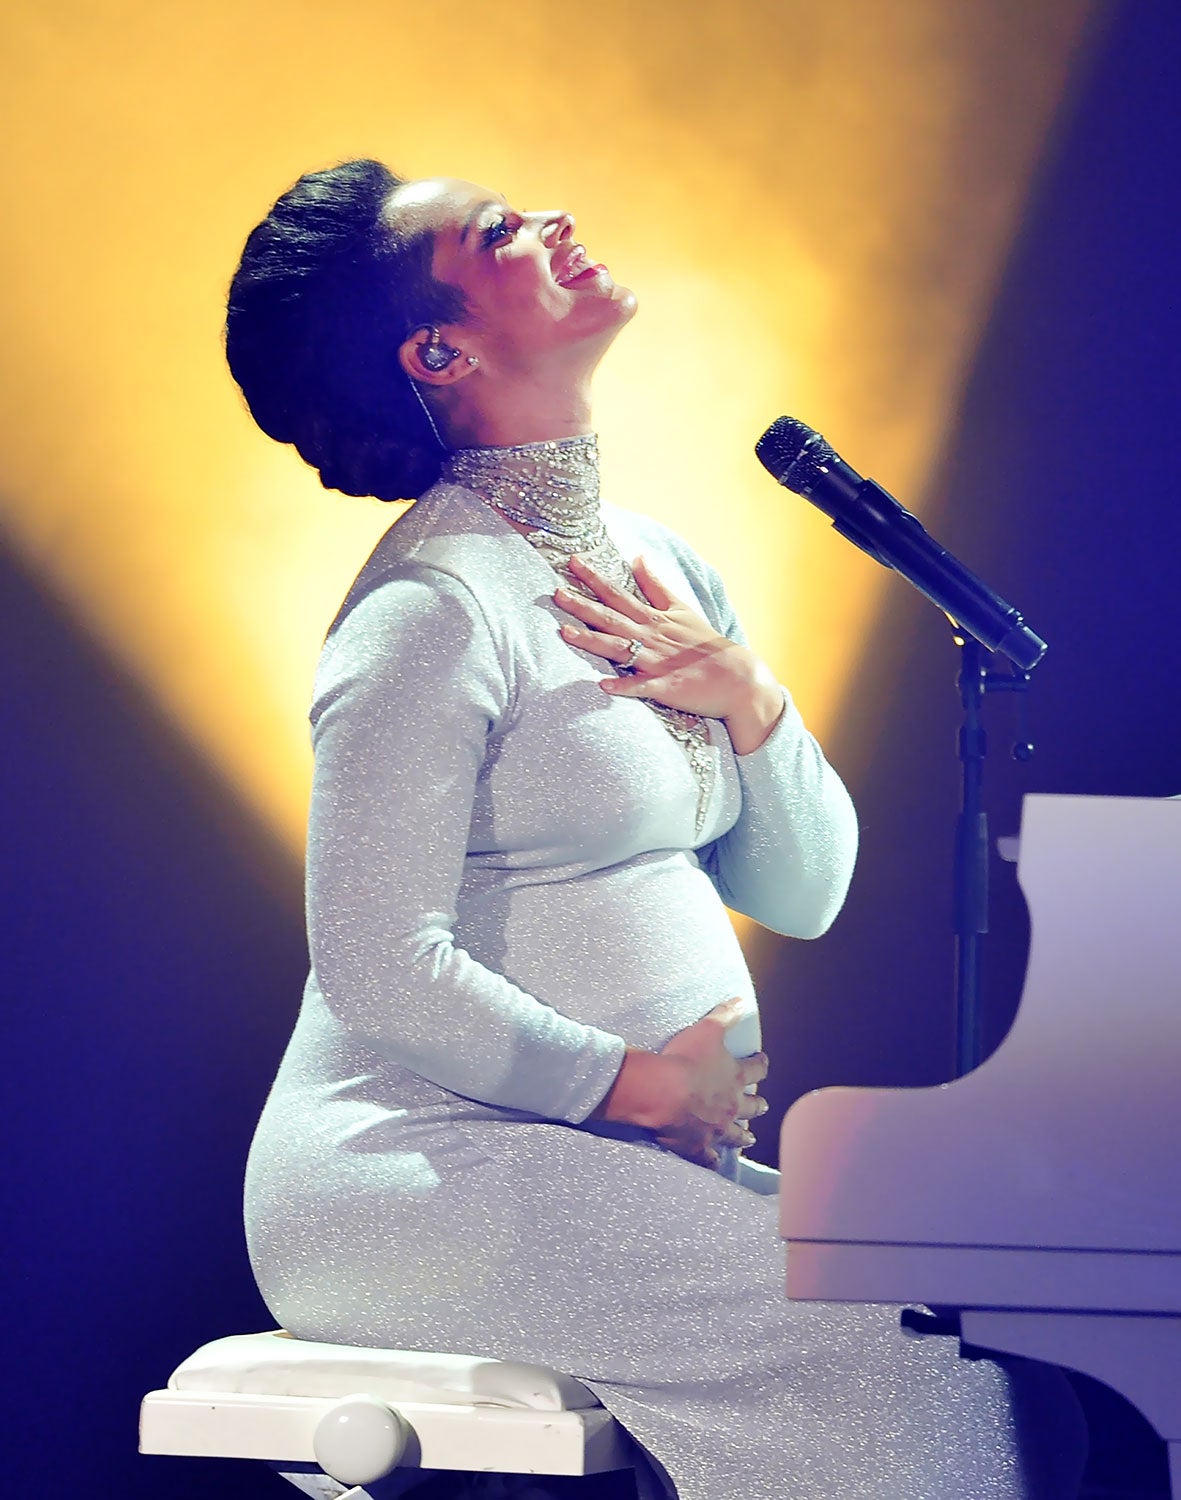 Alicia Keys Shares New Song Following Eric Garner Decision